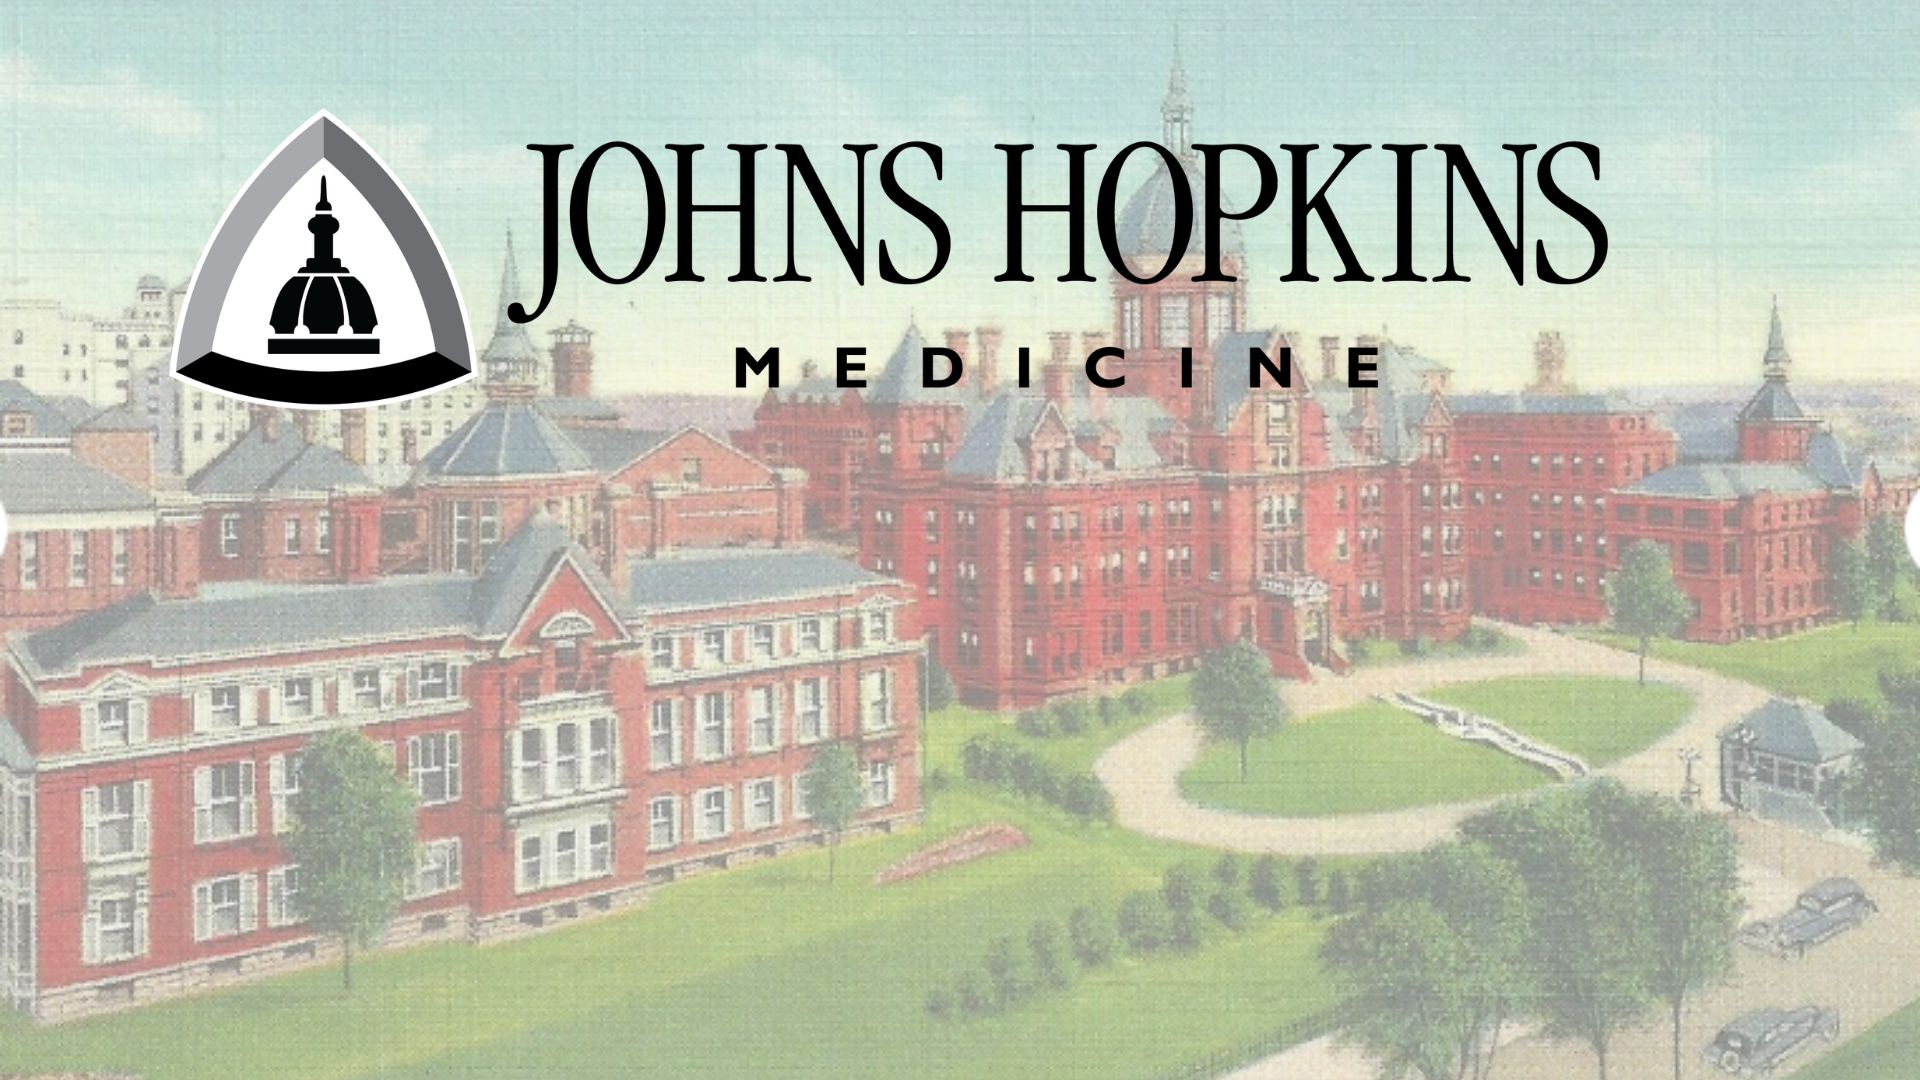 Vintage Image of Johns Hopkins Hospital 